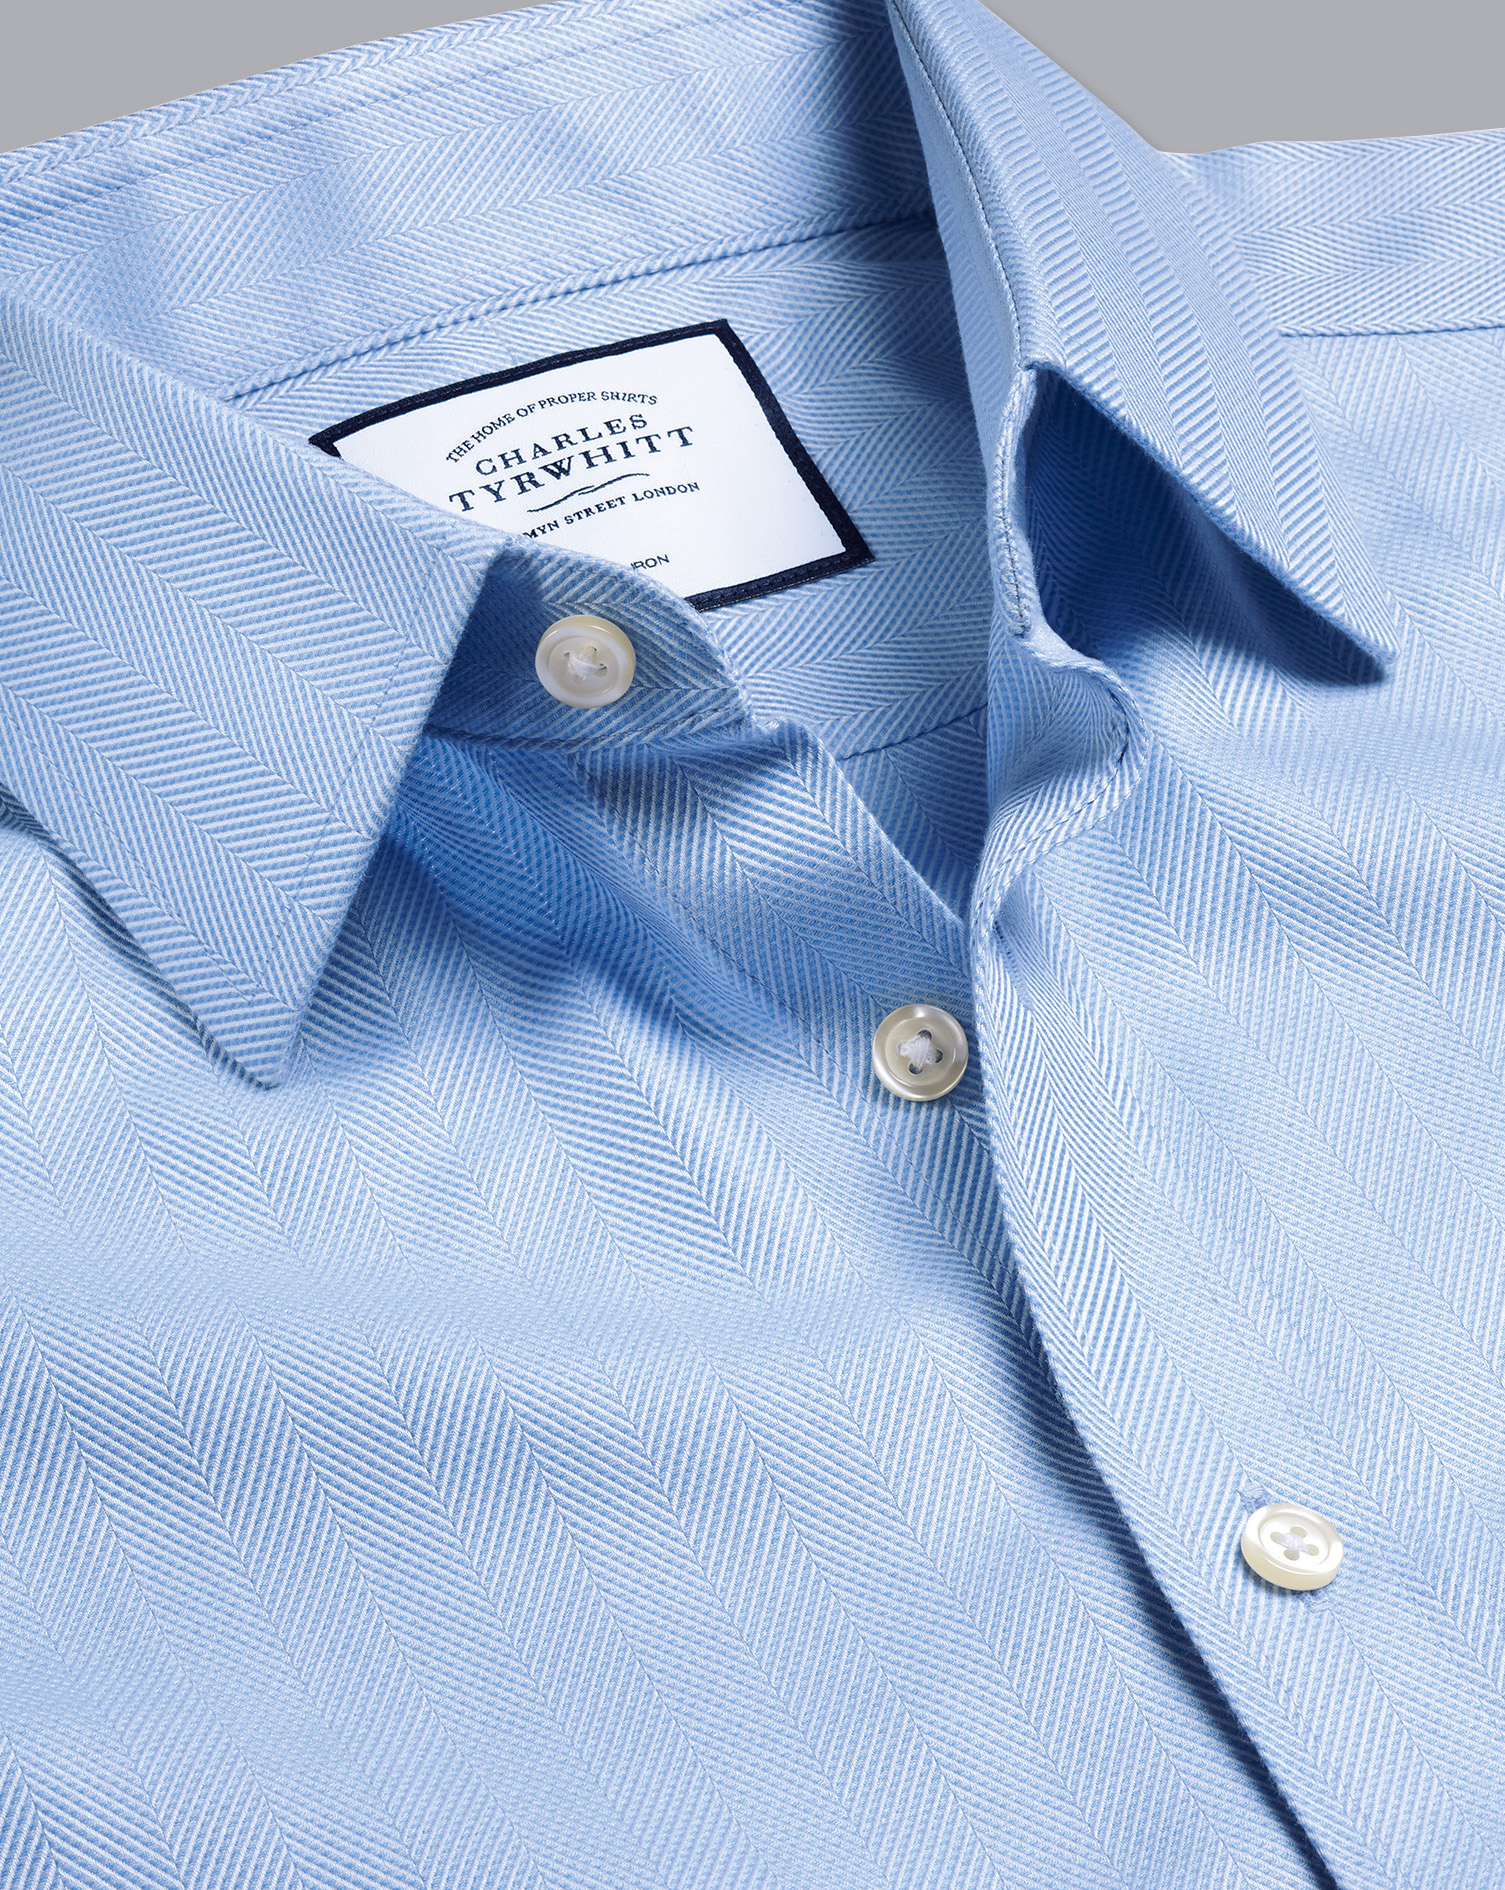 Men's Charles Tyrwhitt Non-Iron Herringbone Dress Shirt - Sky Blue French Cuff Size XXXL Cotton
